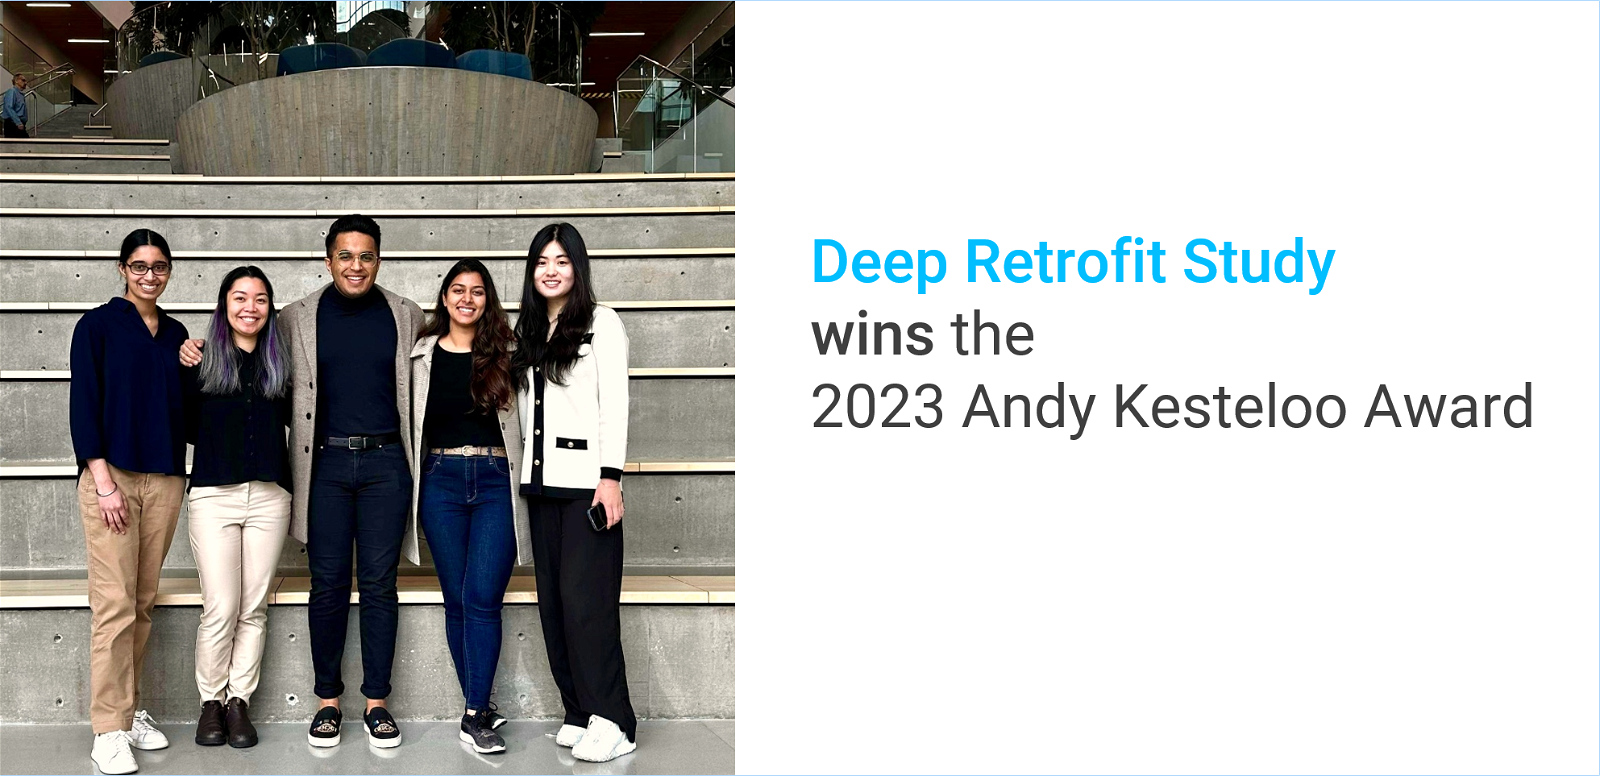 Deep Retrofit Study wins the 2023 Andy Kesteloo Award